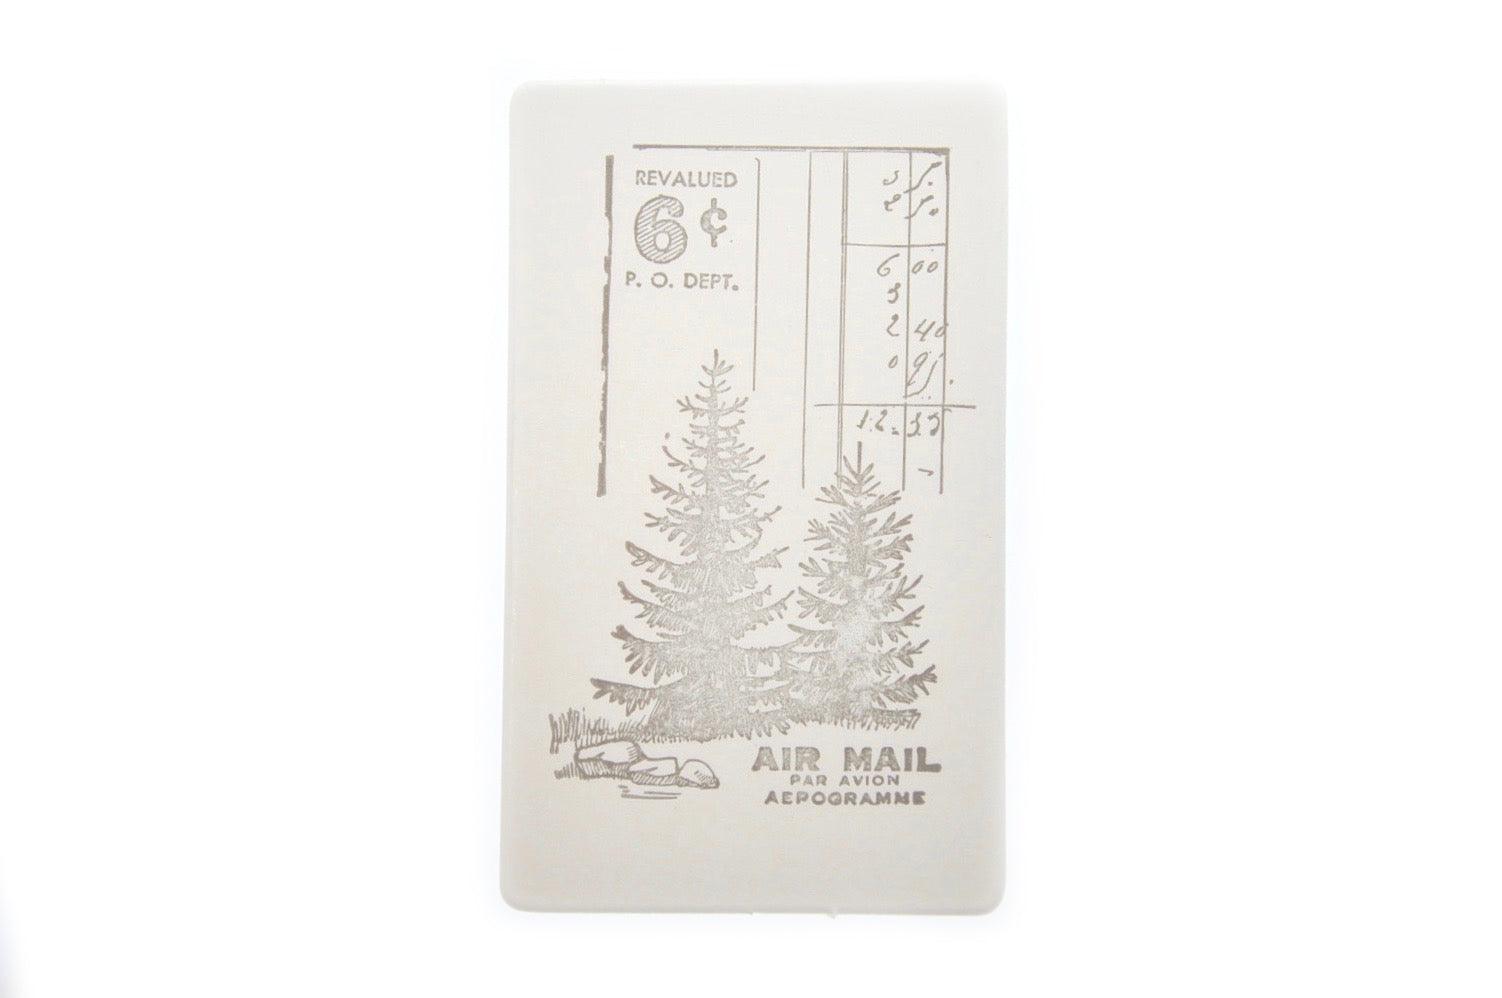 Nature Specimen Rubber Stamp | B - Backtozero B20 - Botanical, Nature, pine tree, rubber stamp, texture, Tree